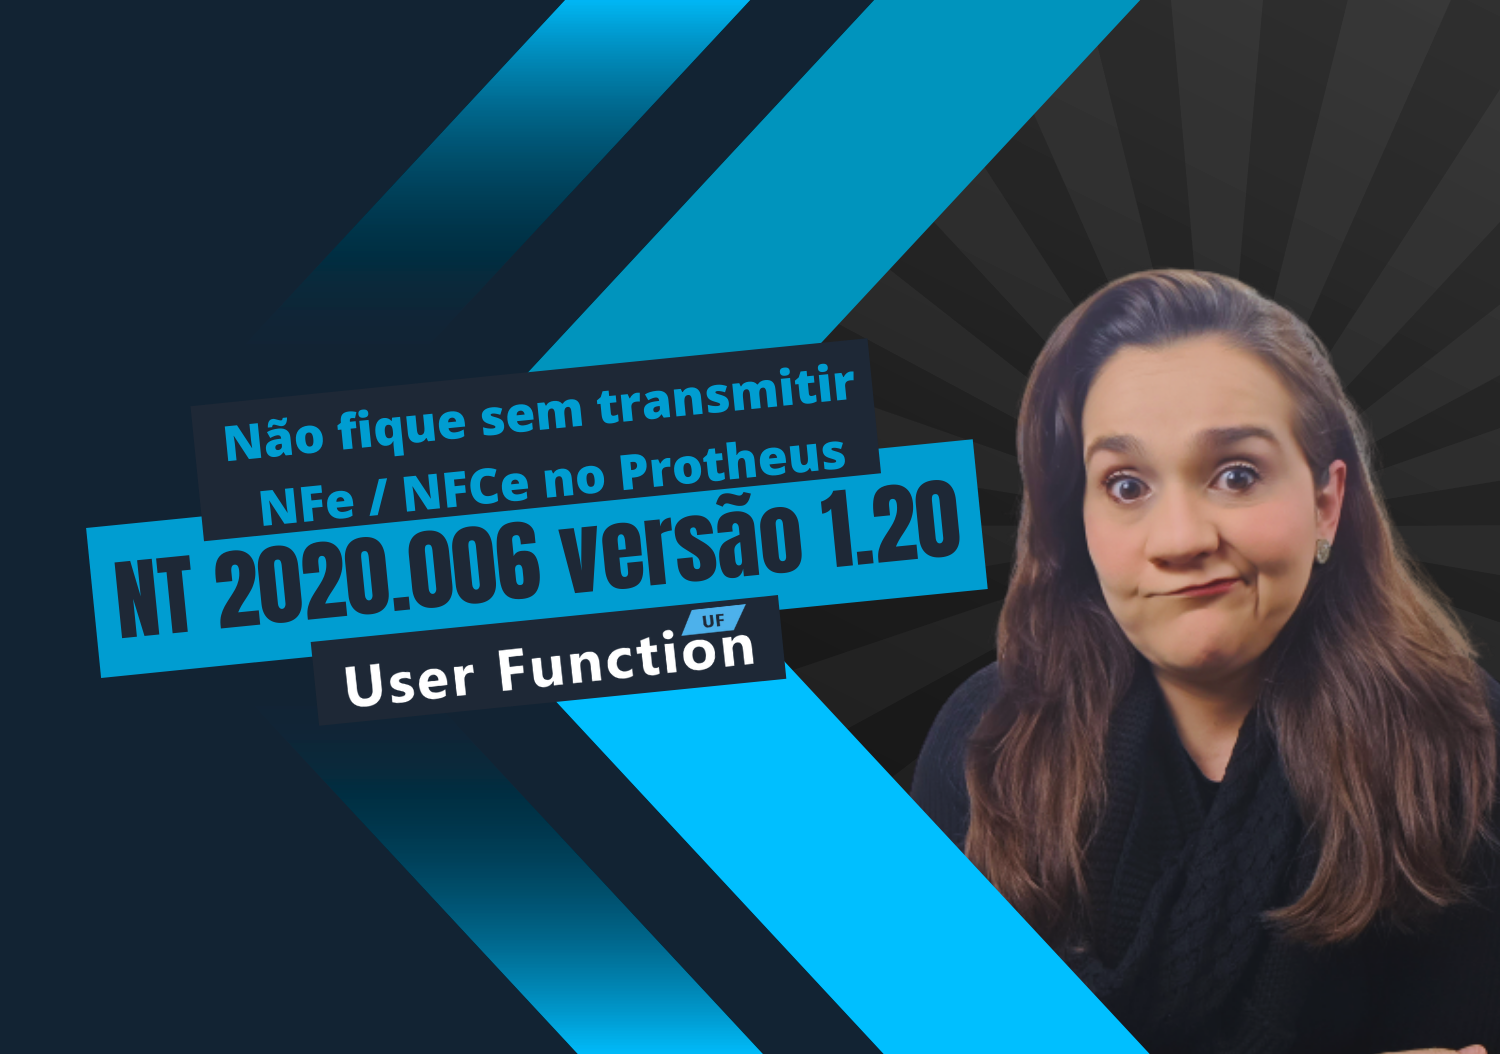 NT 2020.006 versão 1.20